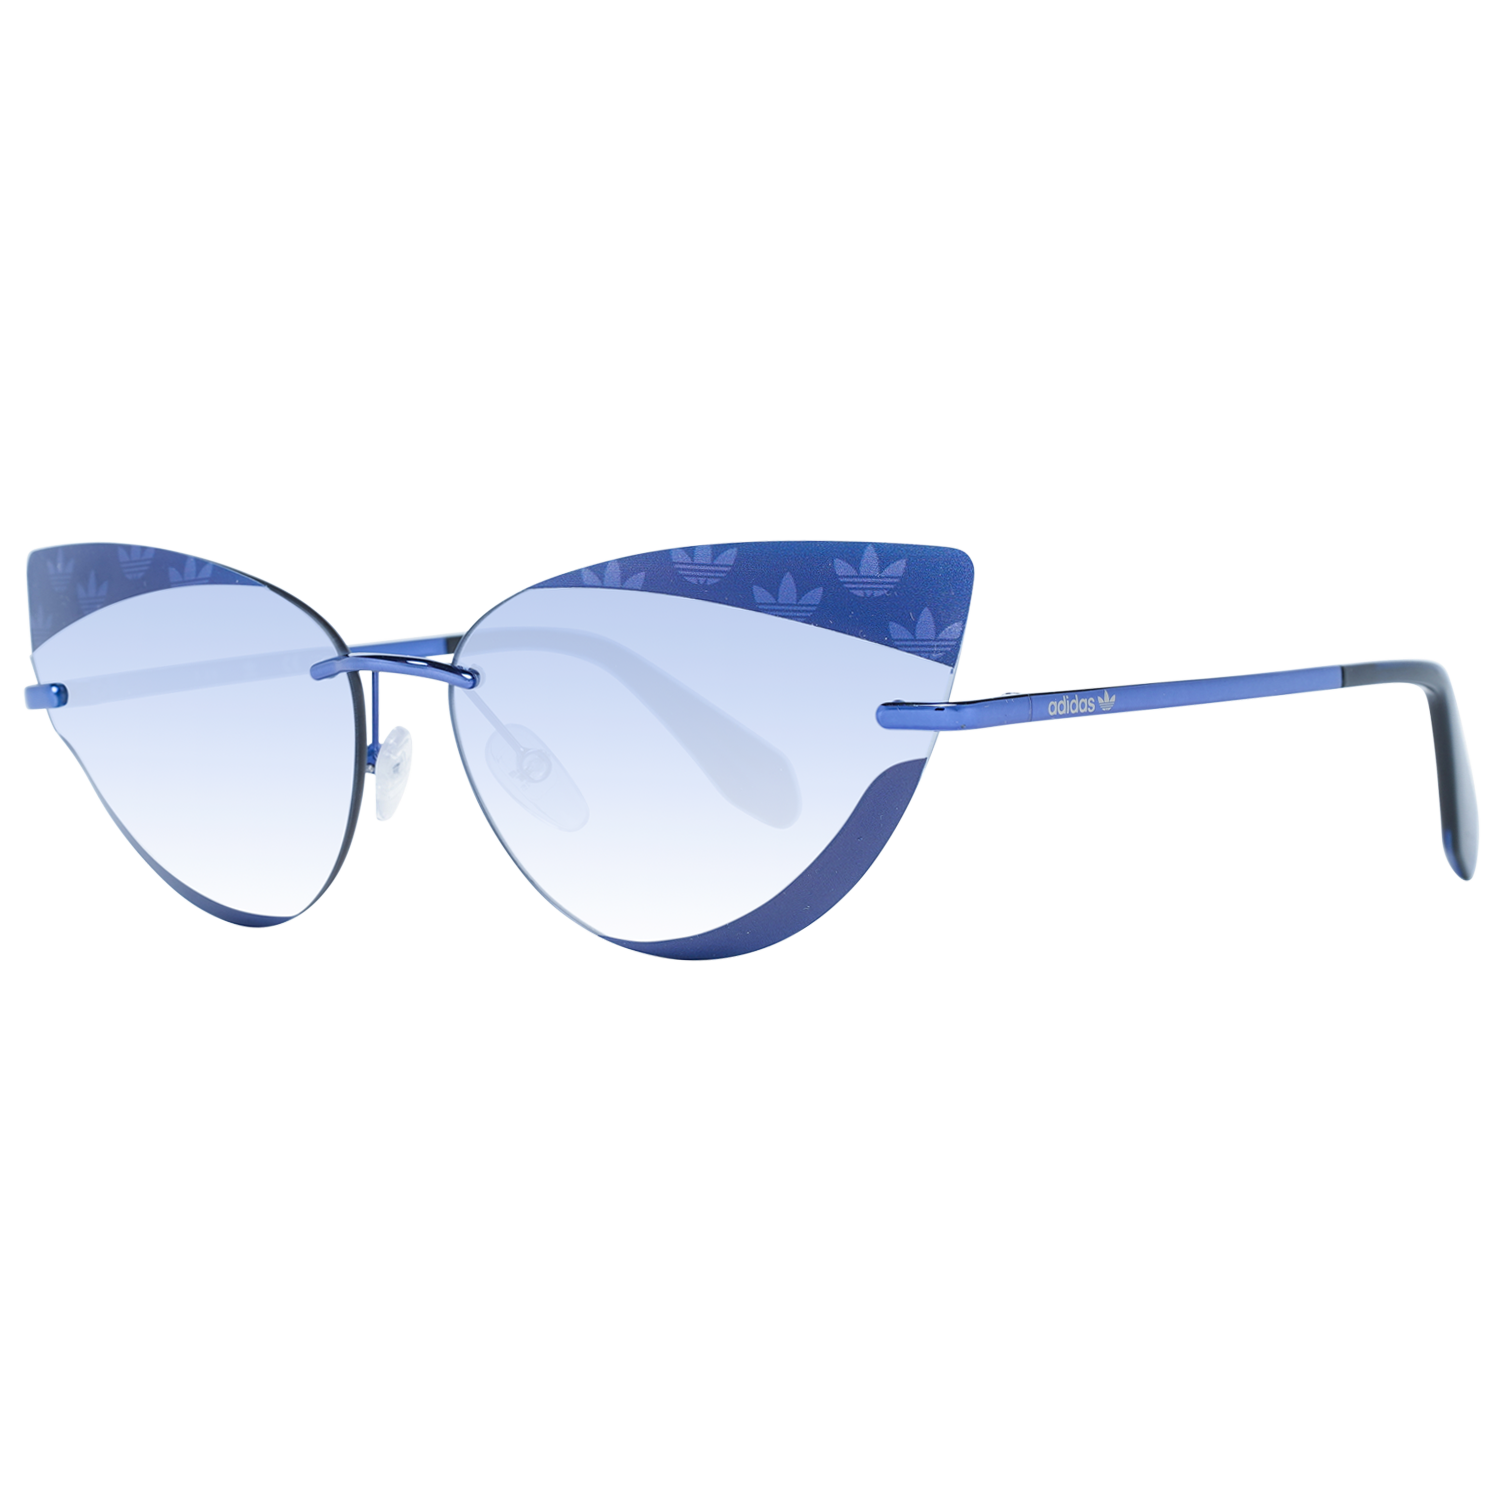 Adidas Sunglasses Adidas Sunglasses OR0016 90W 64 Eyeglasses Eyewear UK USA Australia 